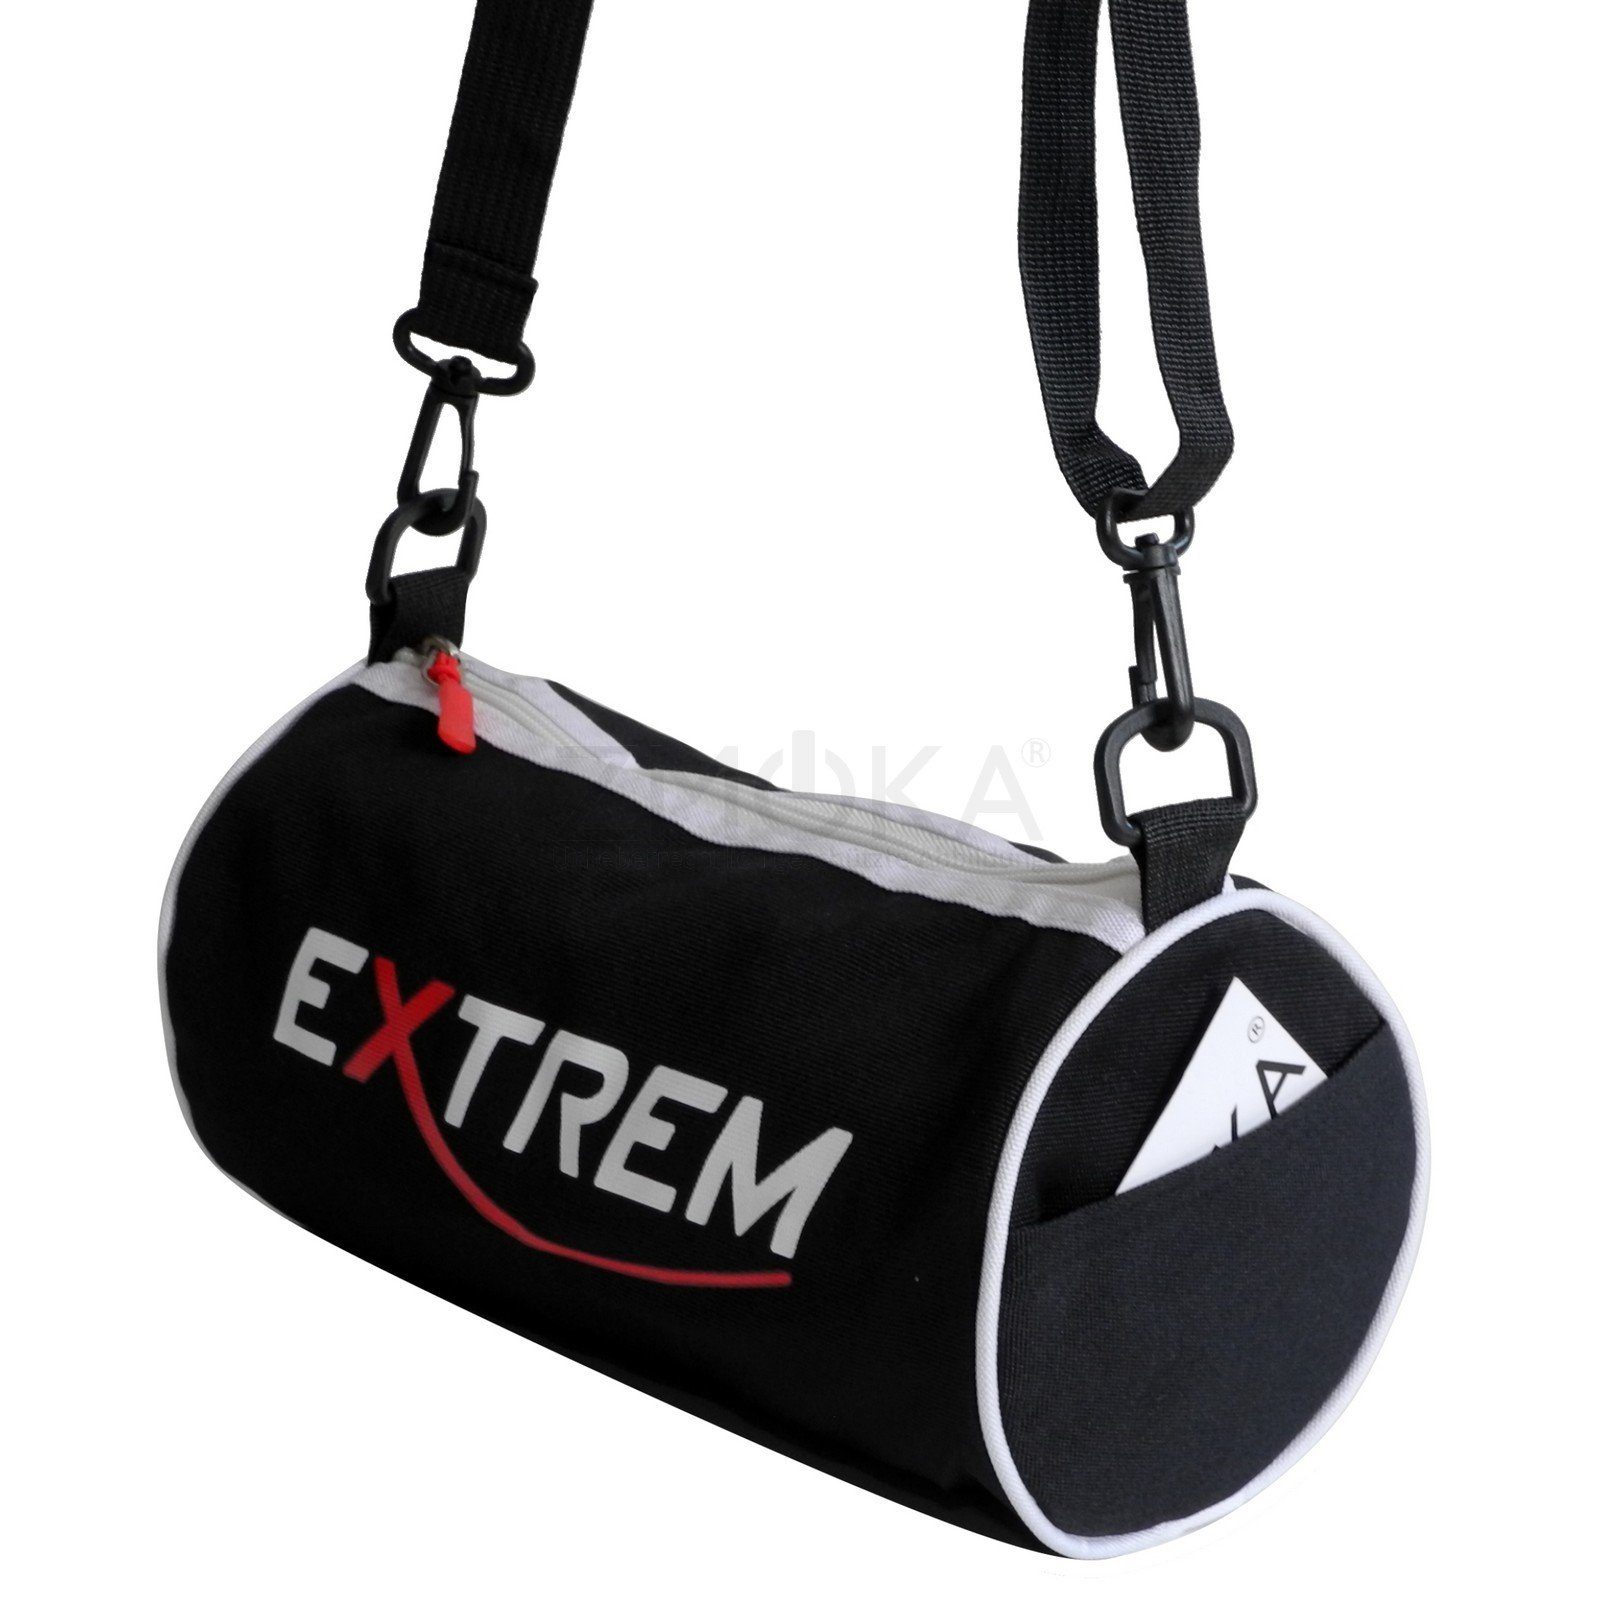 STREET BAG Extreme Crossbody Uni Street Umhängetasche Umhängetasche Bag Auswahl Bag - Schwarz